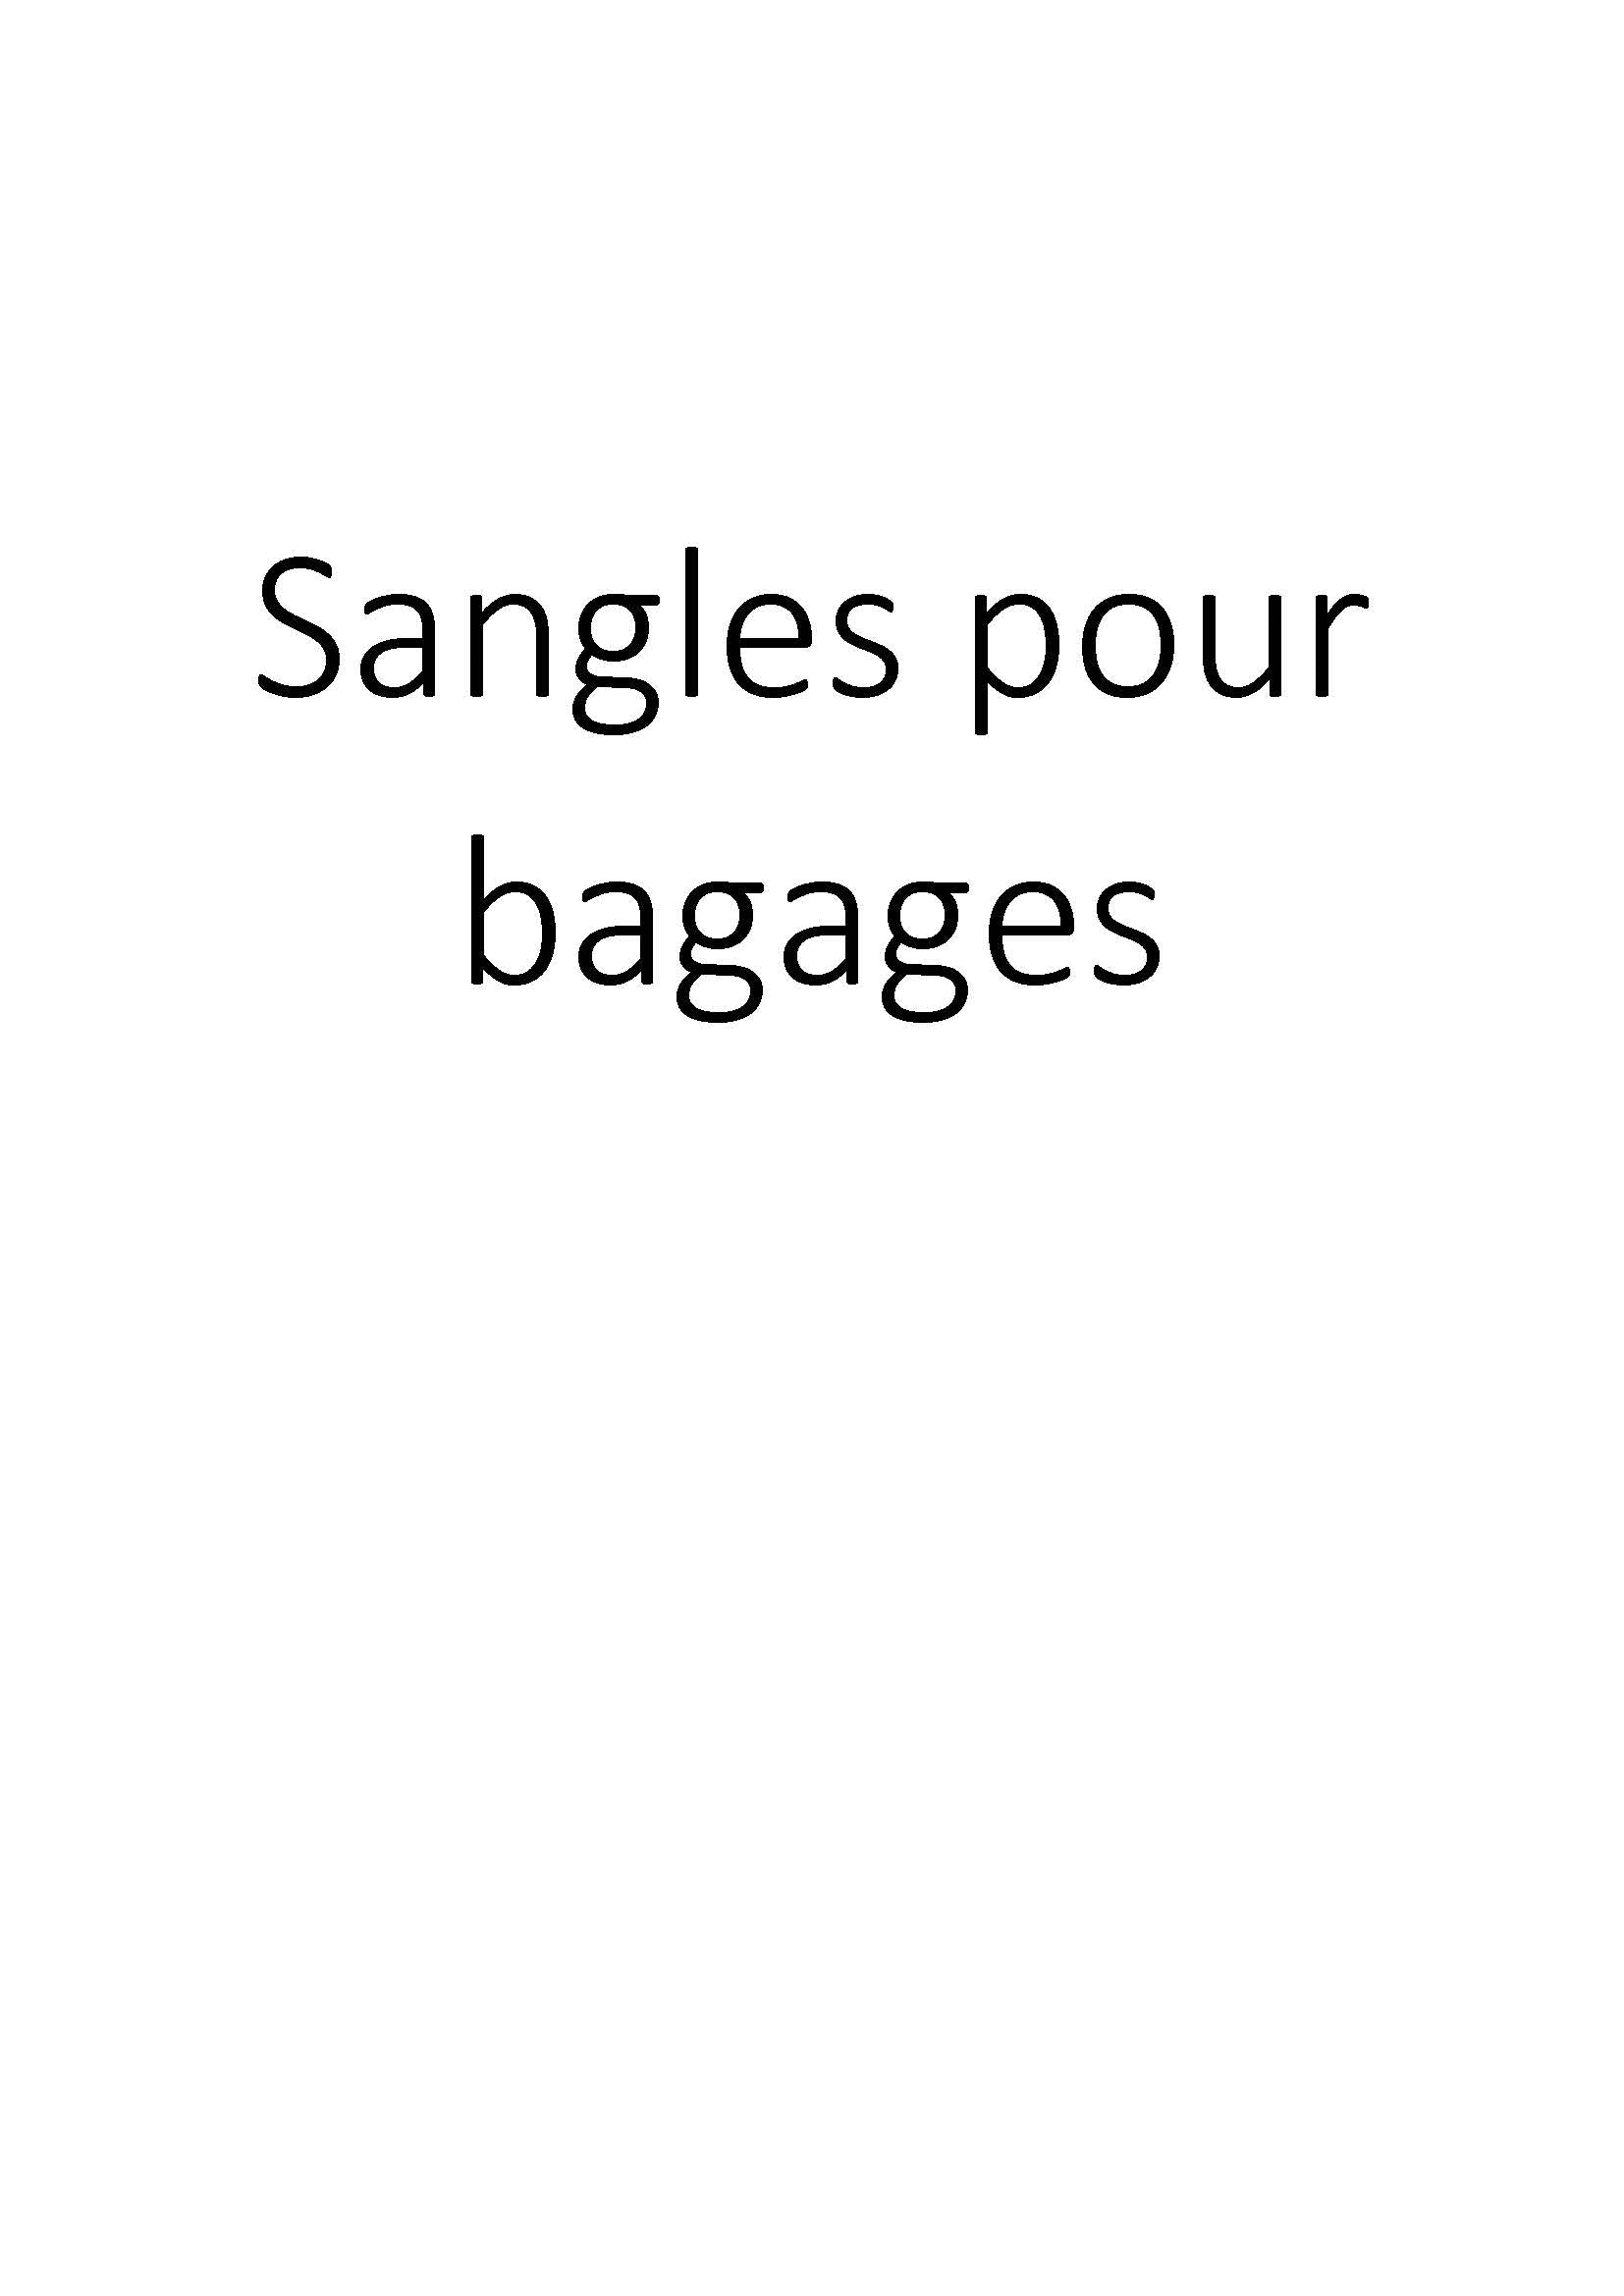 Sangles pour bagages clicktofournisseur.com